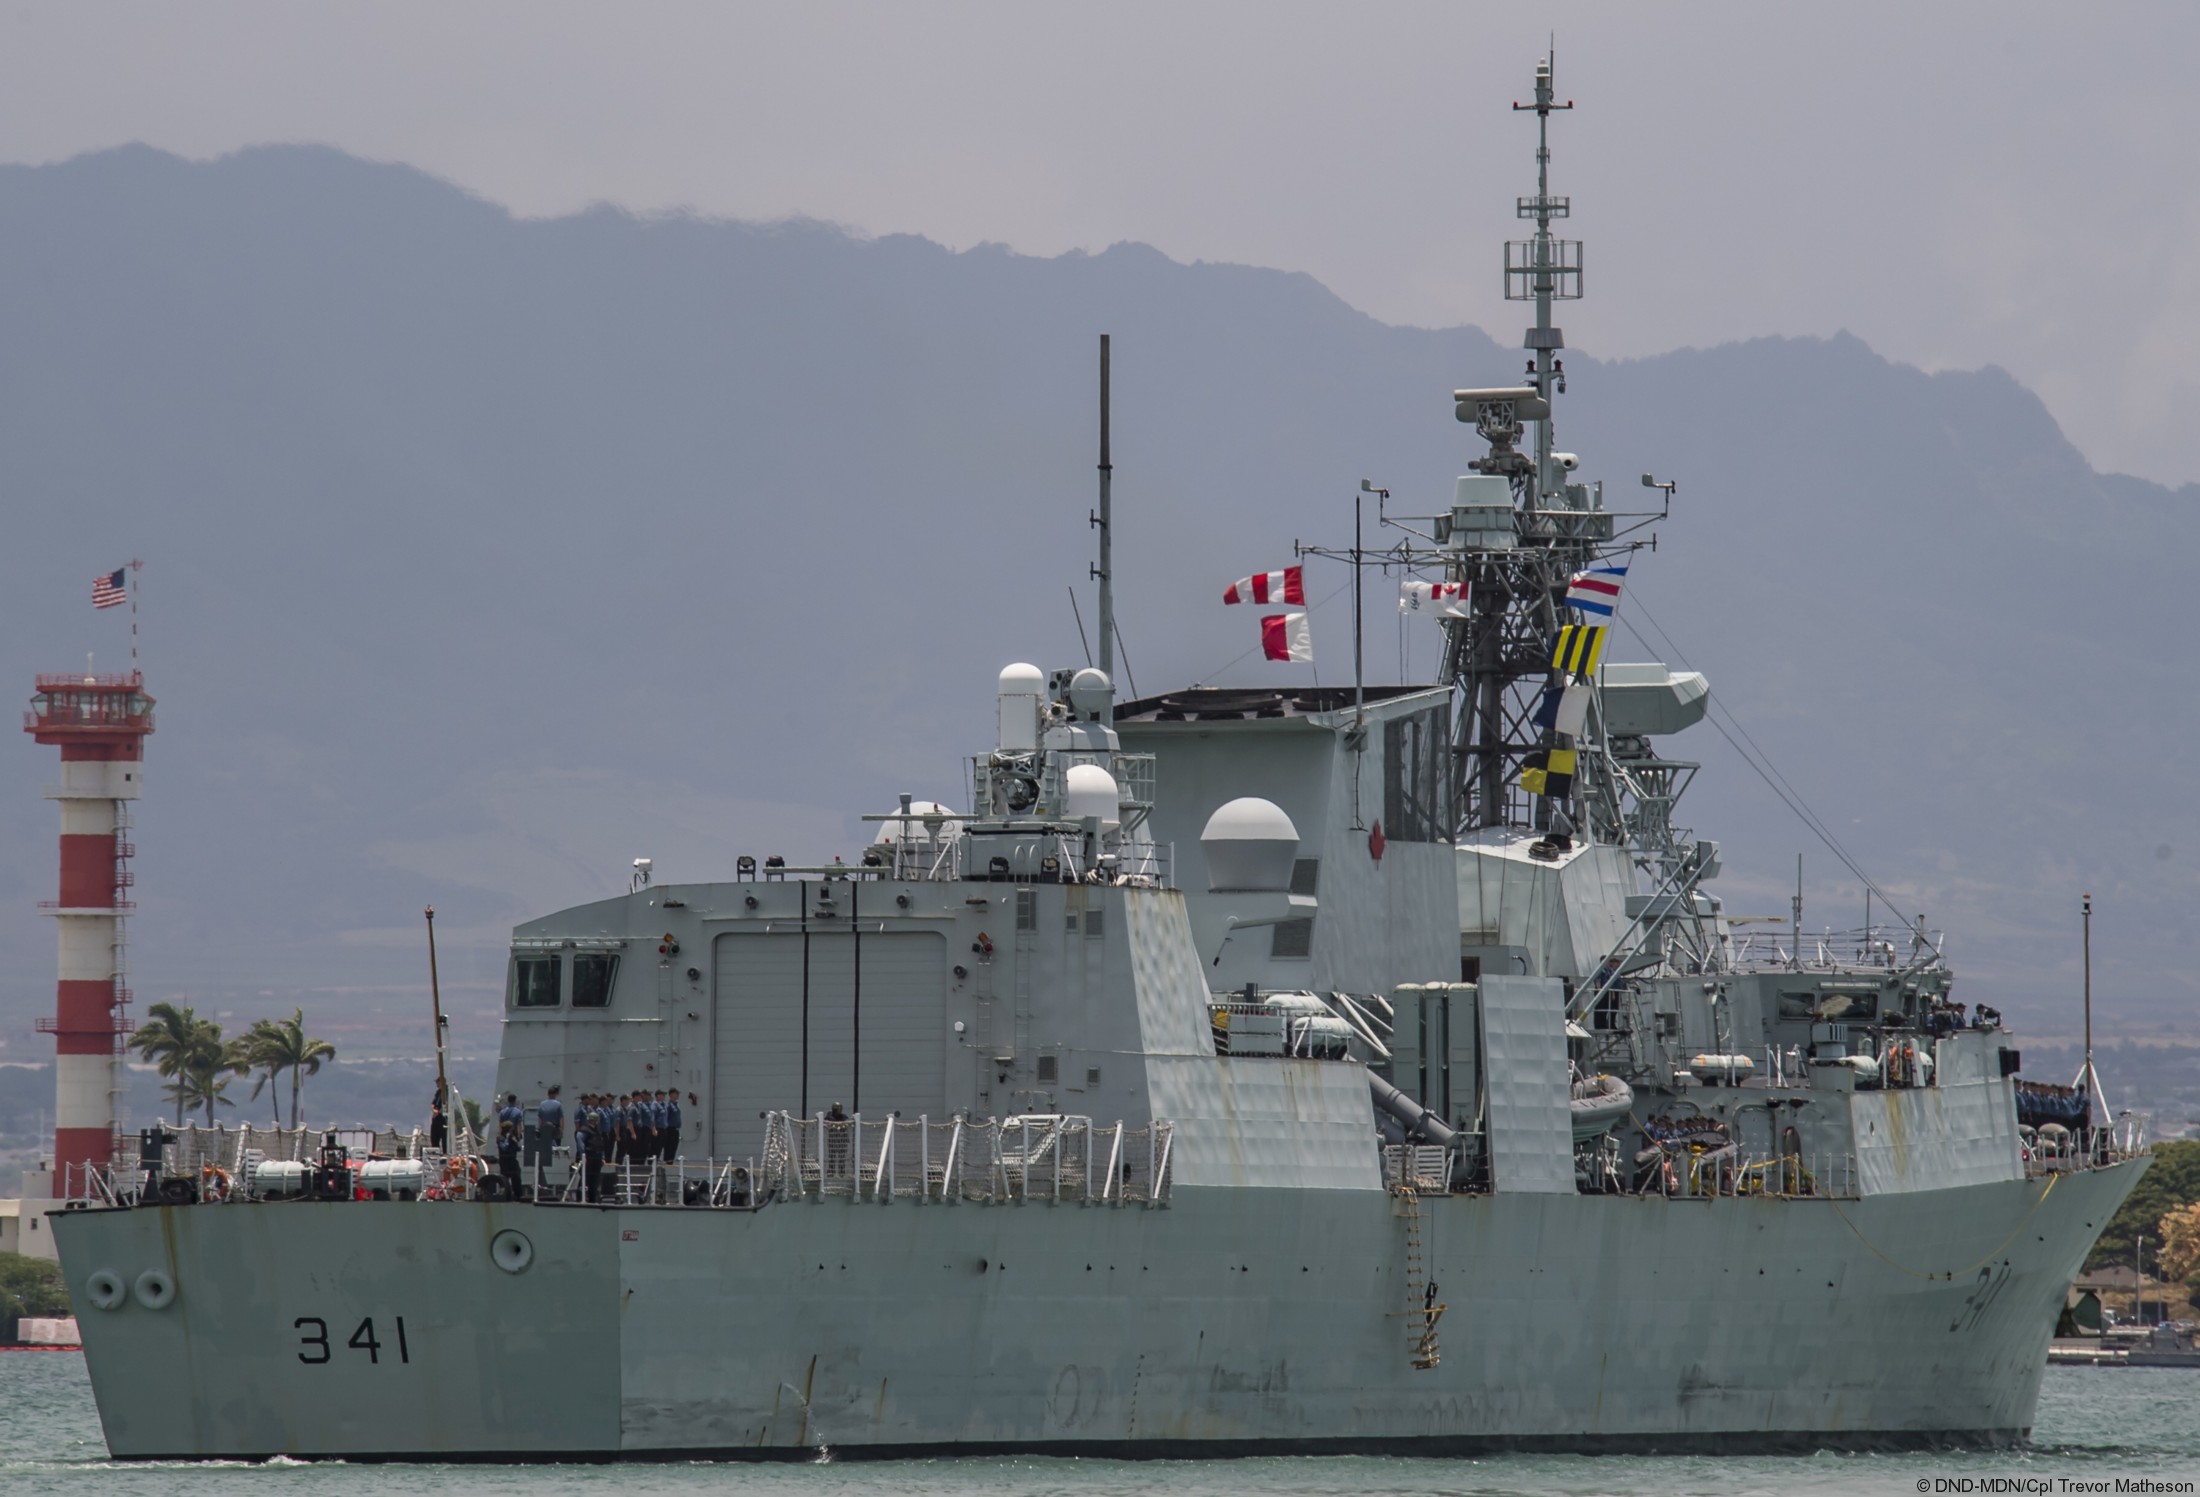 ffh-441 hmcs ottawa halifax class helicopter patrol frigate ncsm royal canadian navy 21